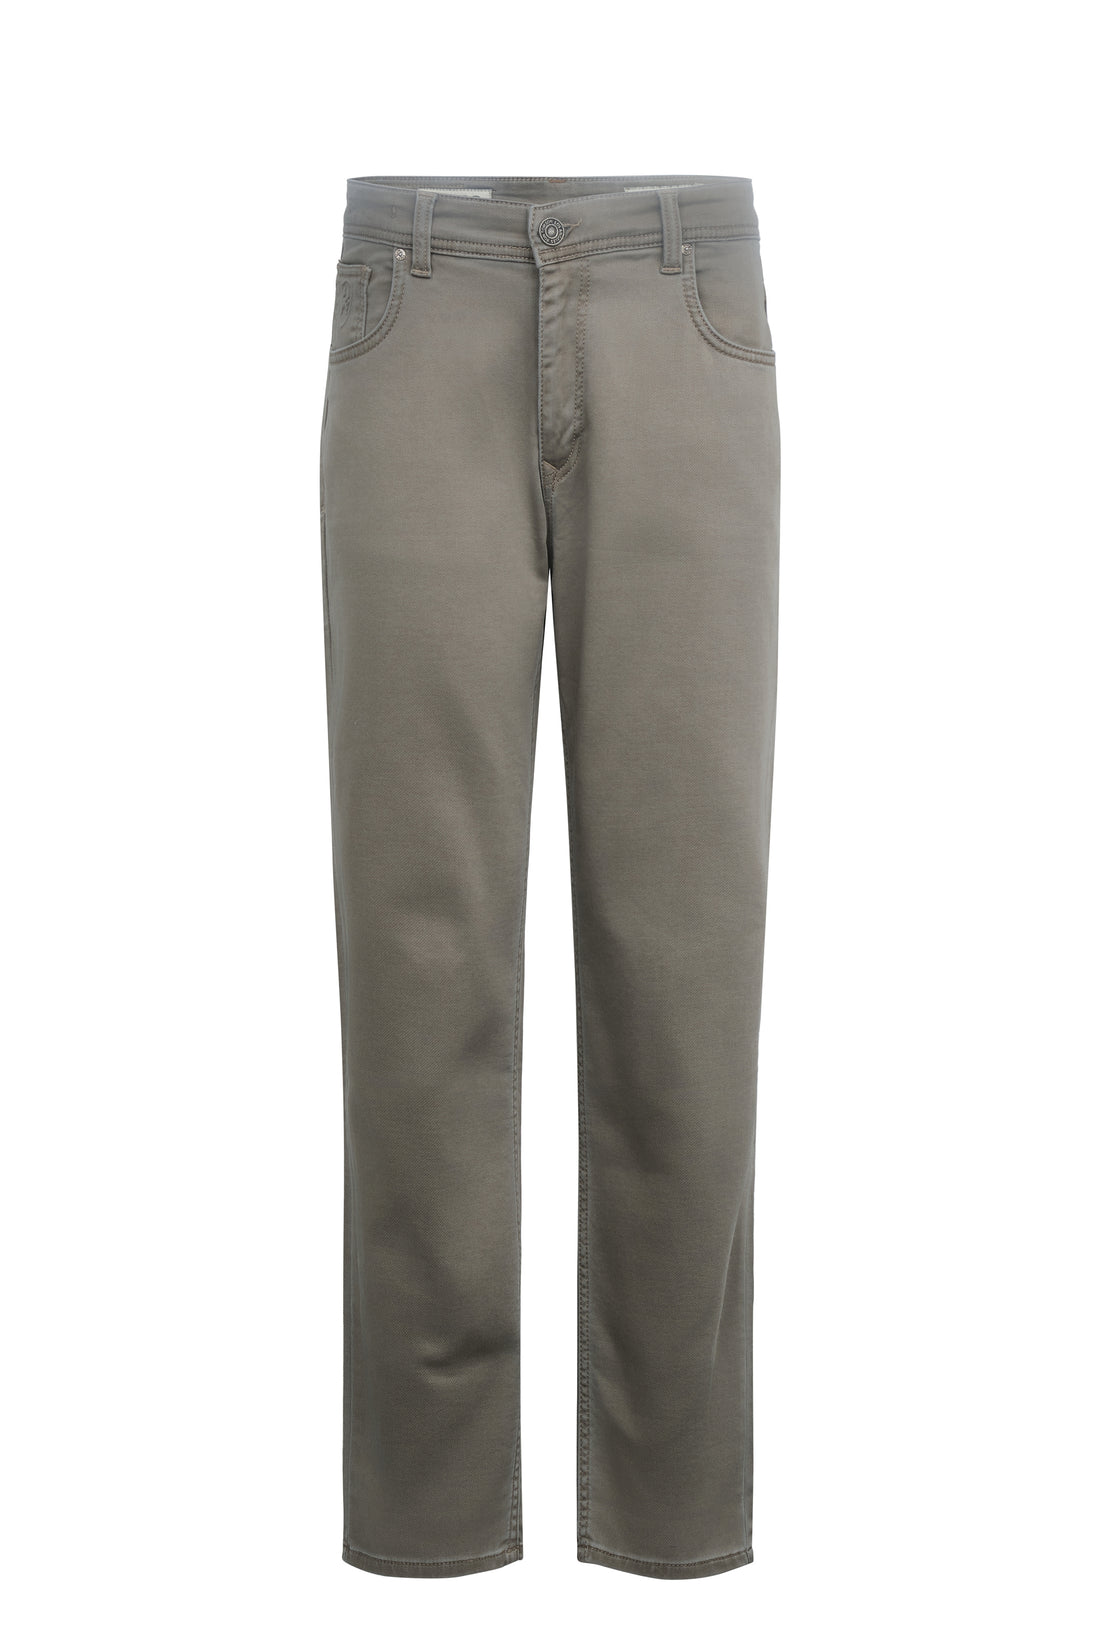 Super Soft 5-pocket Style Pants - Stone